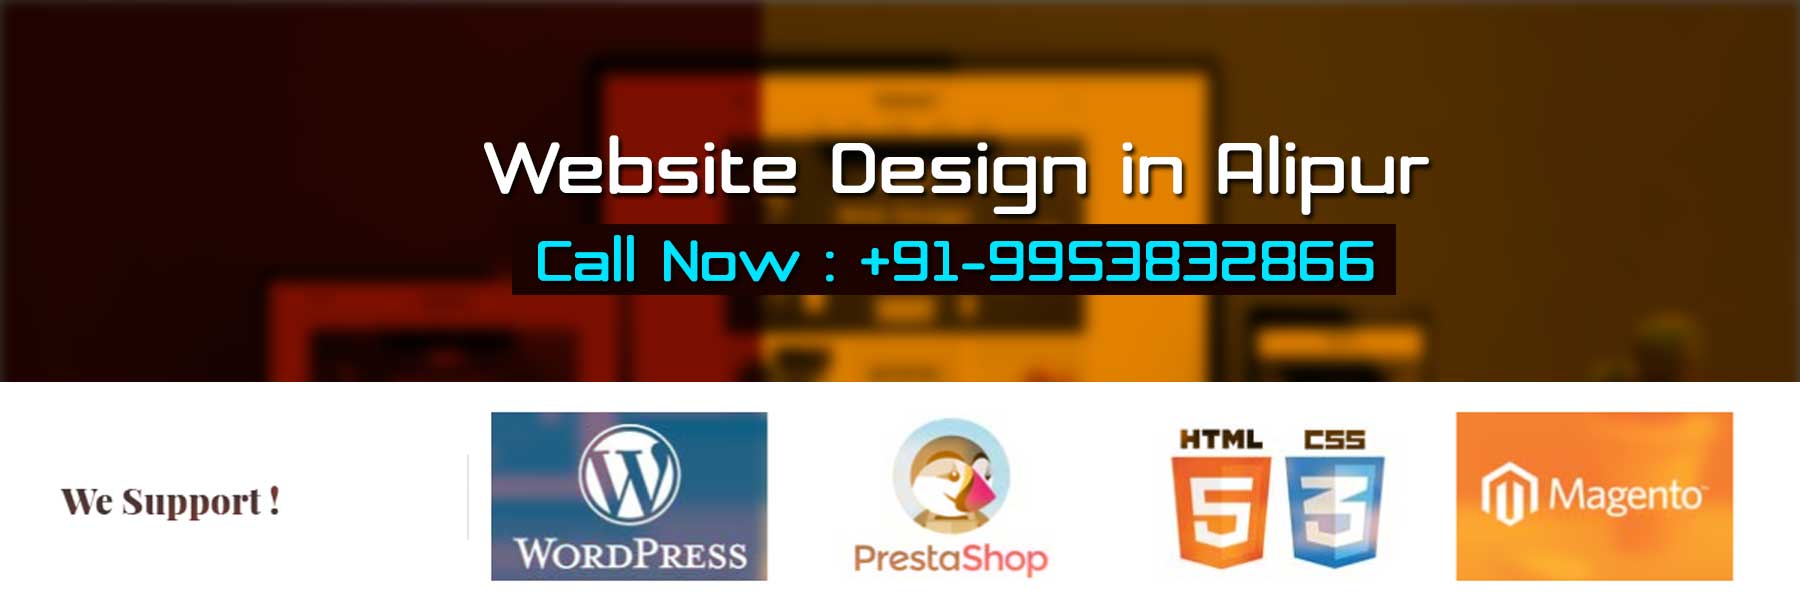 Website Design in Alipur